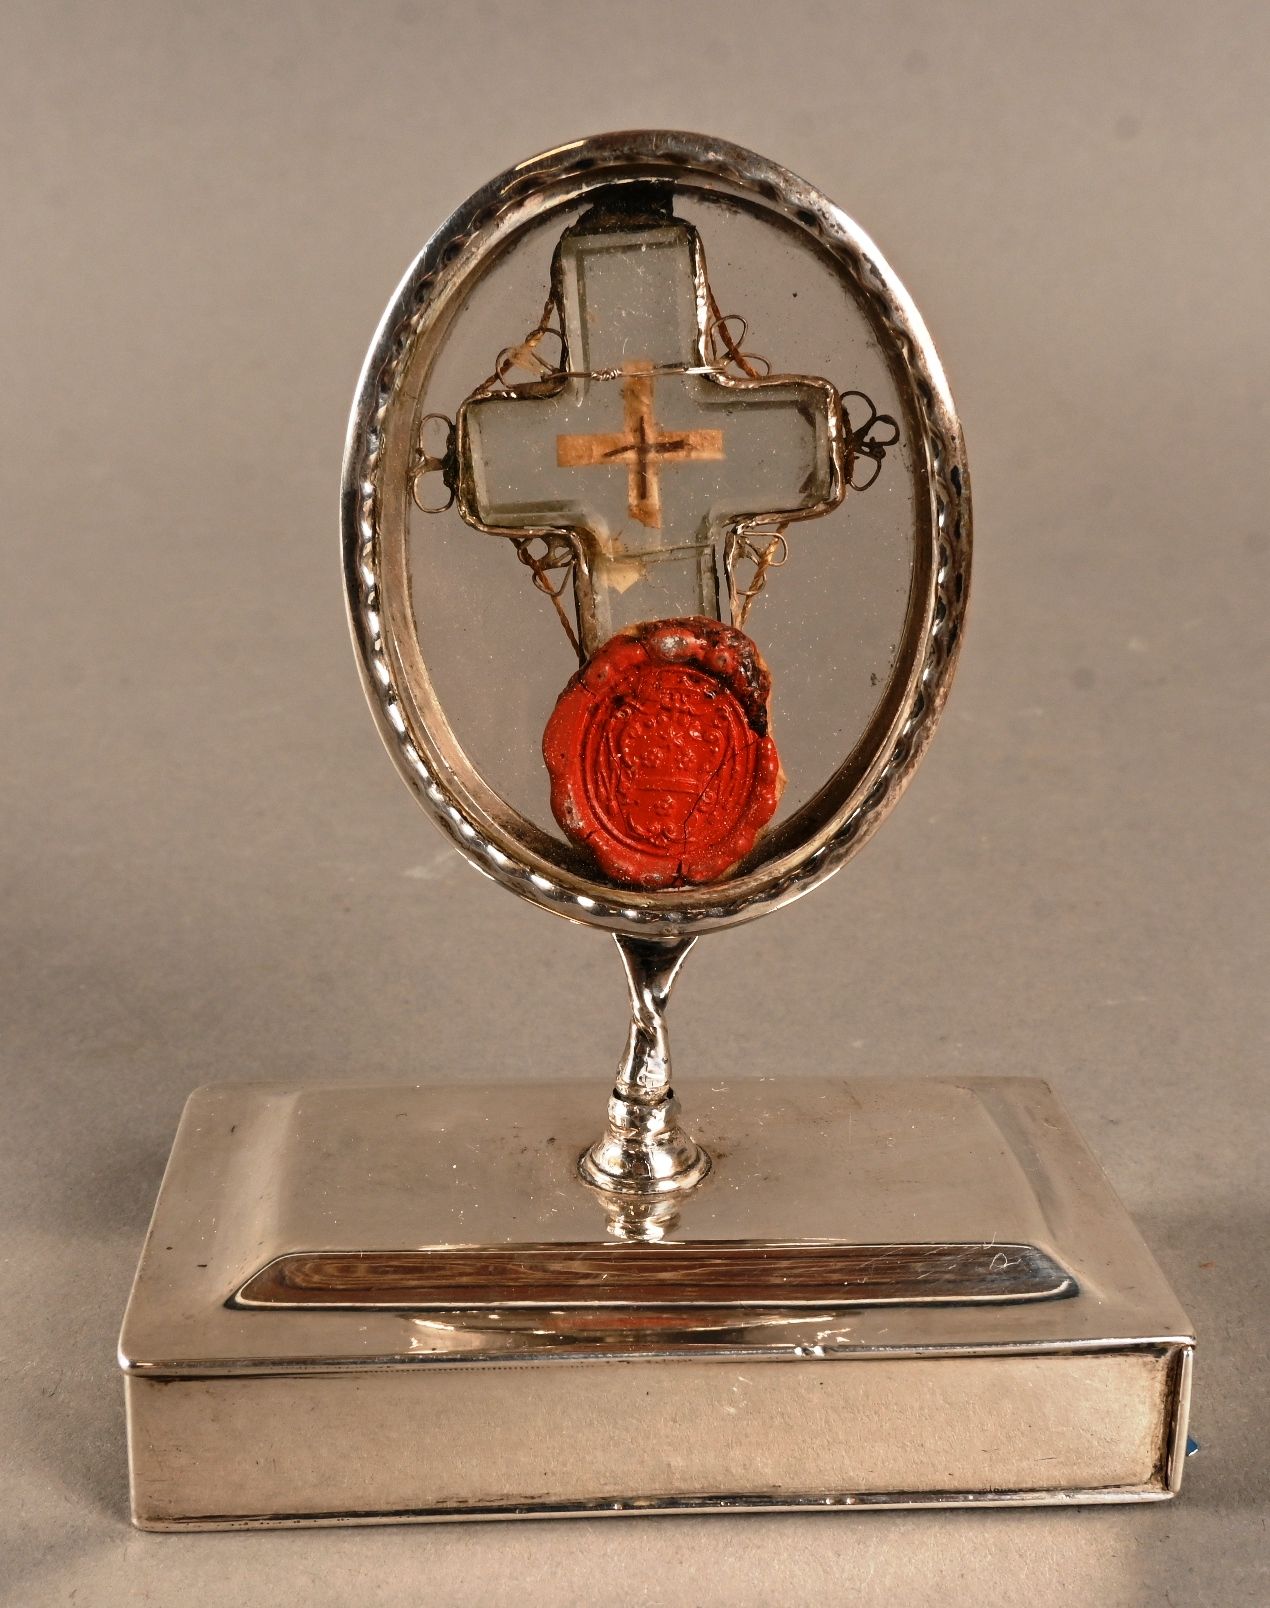 Petite relique d'une croix avec relique 镀银金属椭圆形和镀银金属夹层中的小型十字架遗物，带有遗物和红色蜡封。
高：9厘米